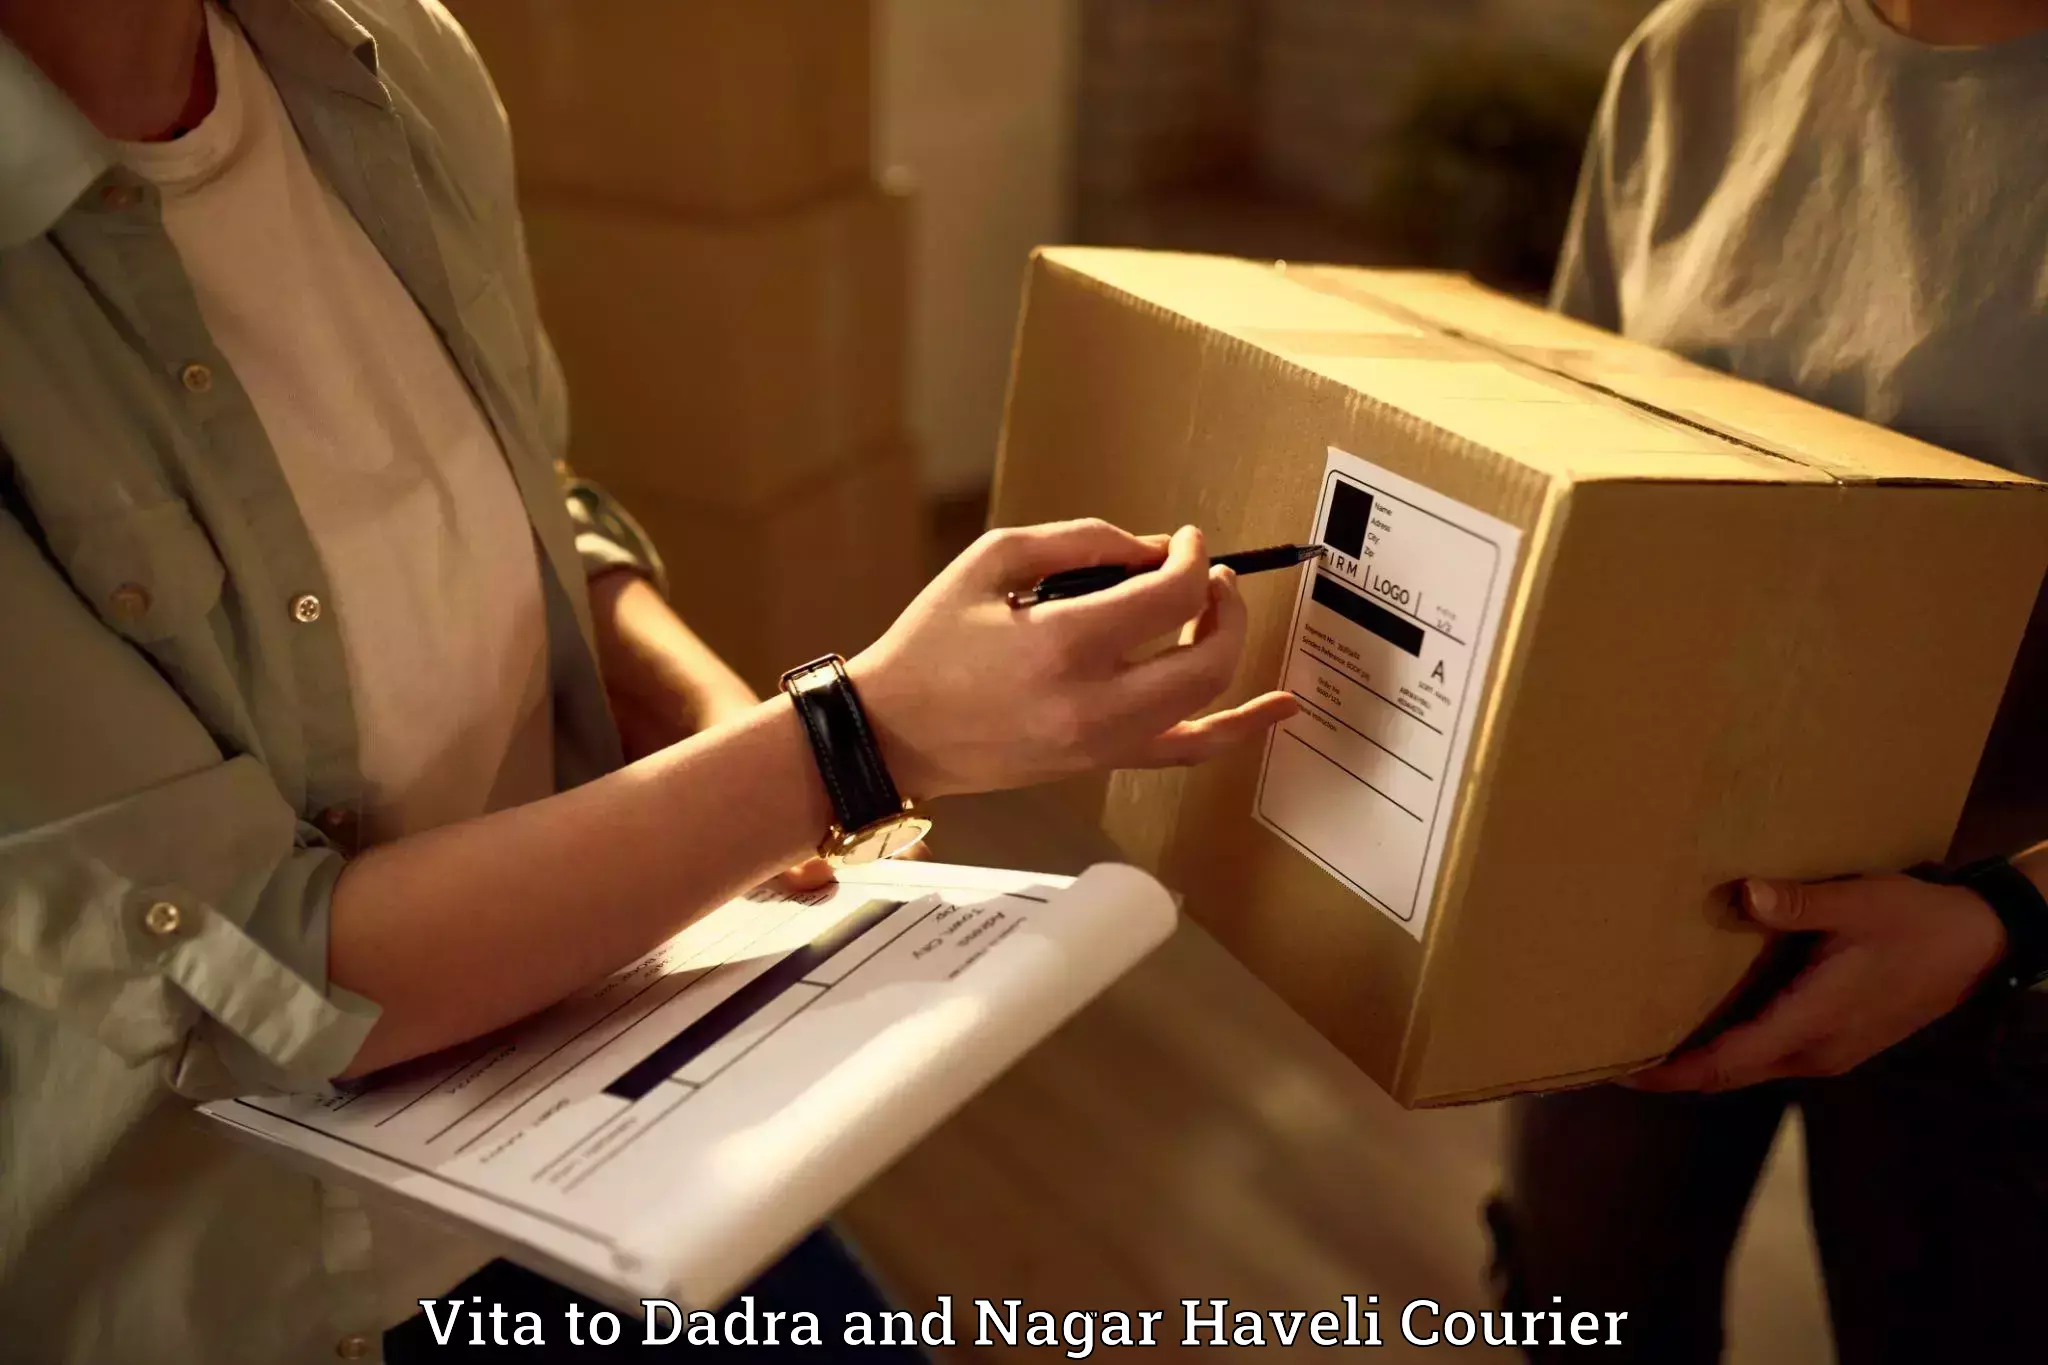 Quality moving company Vita to Dadra and Nagar Haveli